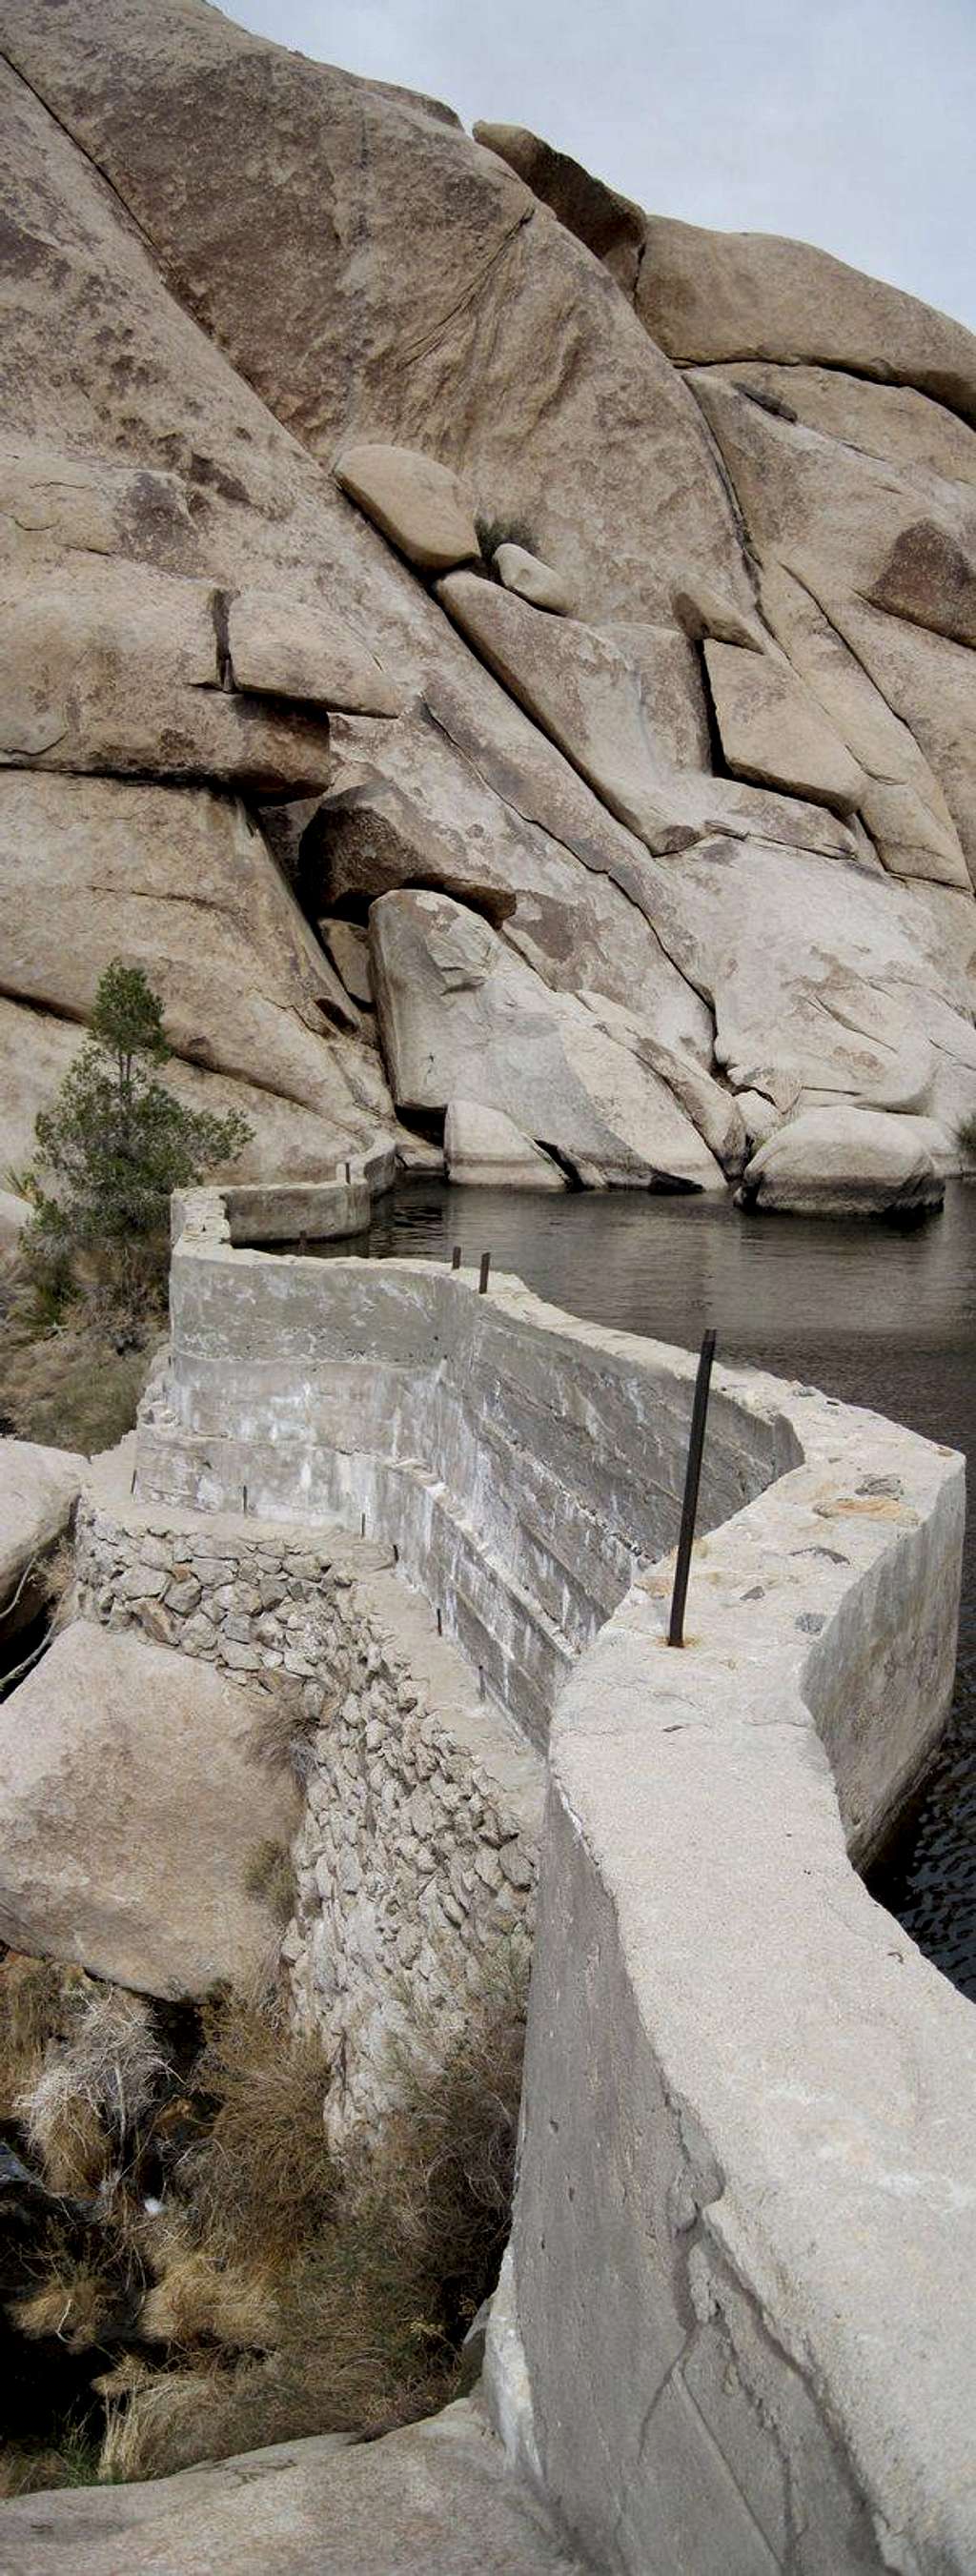 Barker Dam